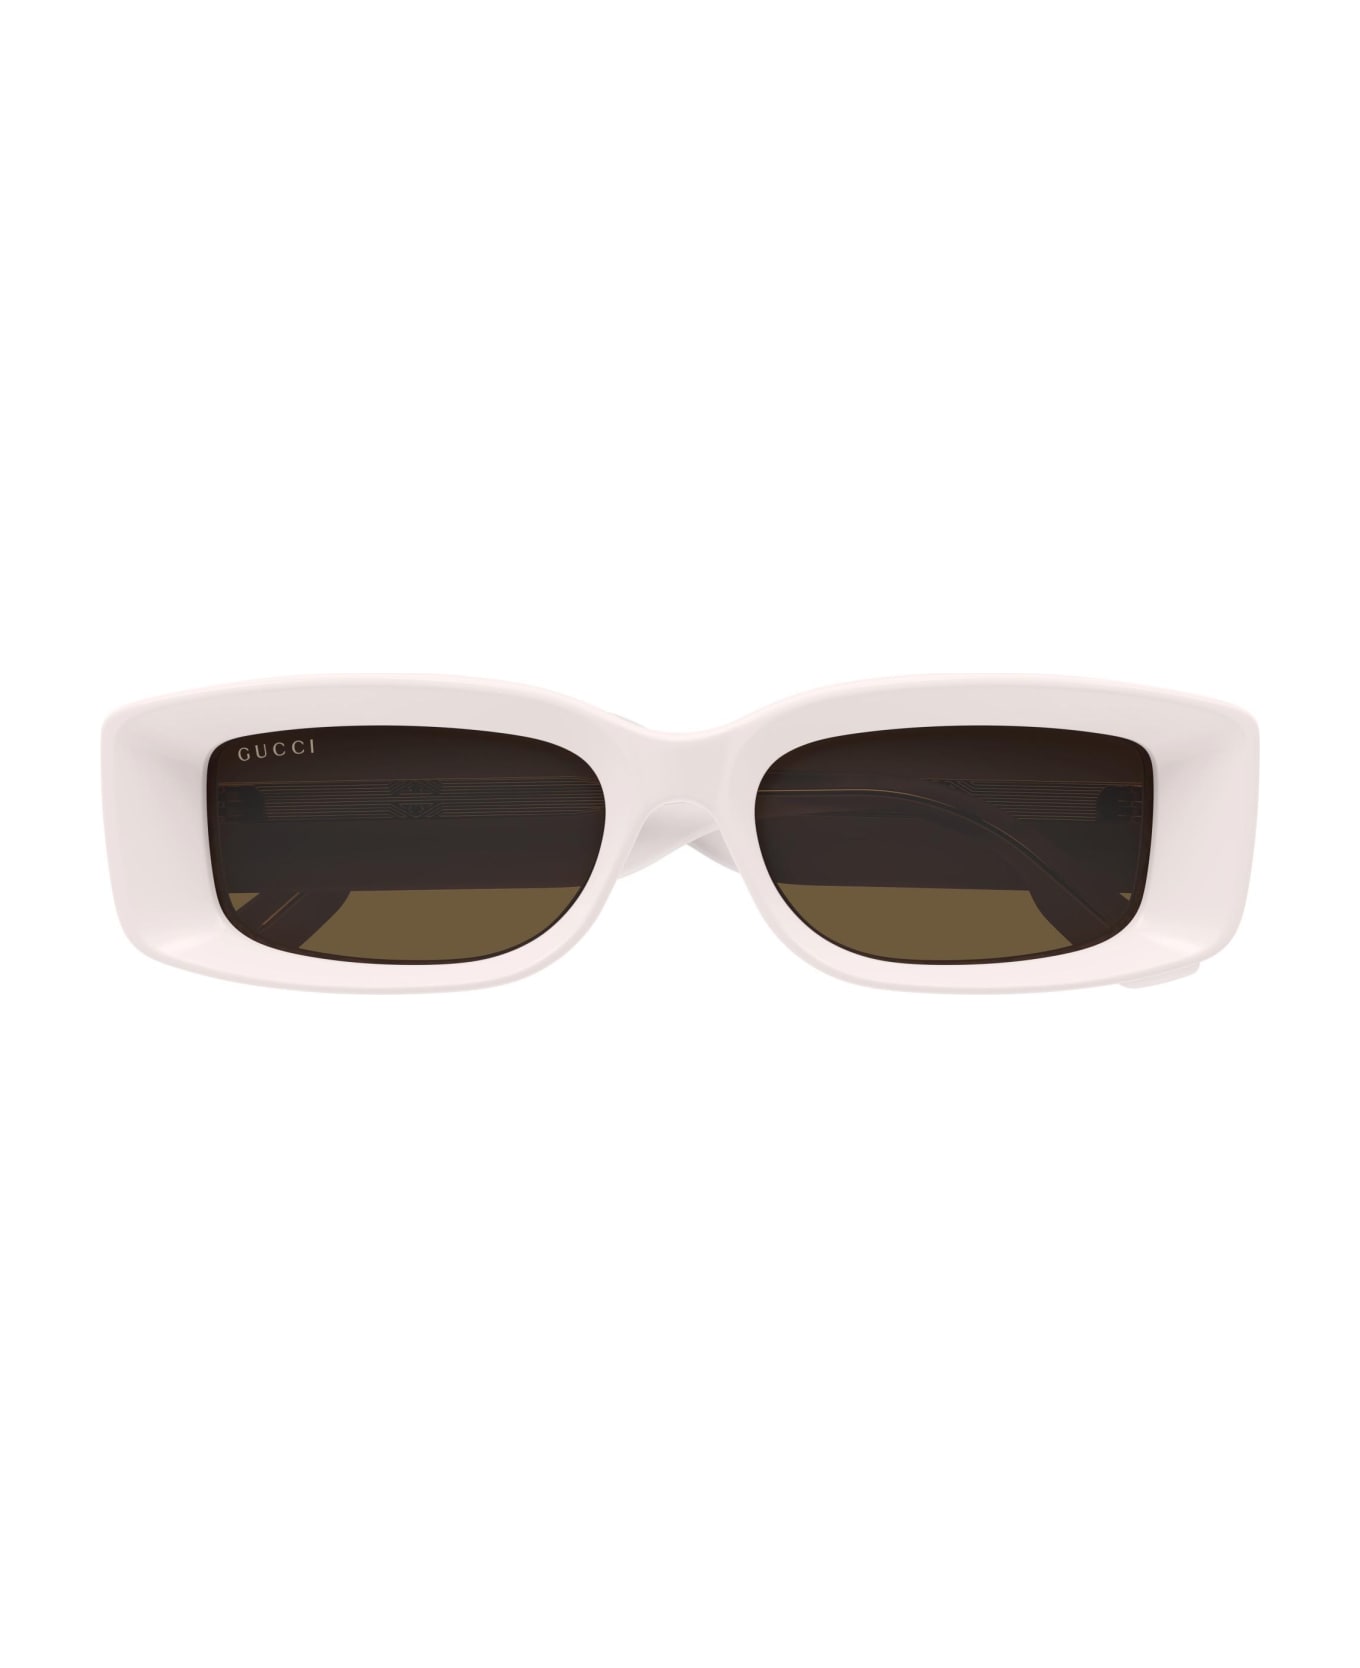 Gucci Eyewear Sunglasses - Avorio/Marrone サングラス